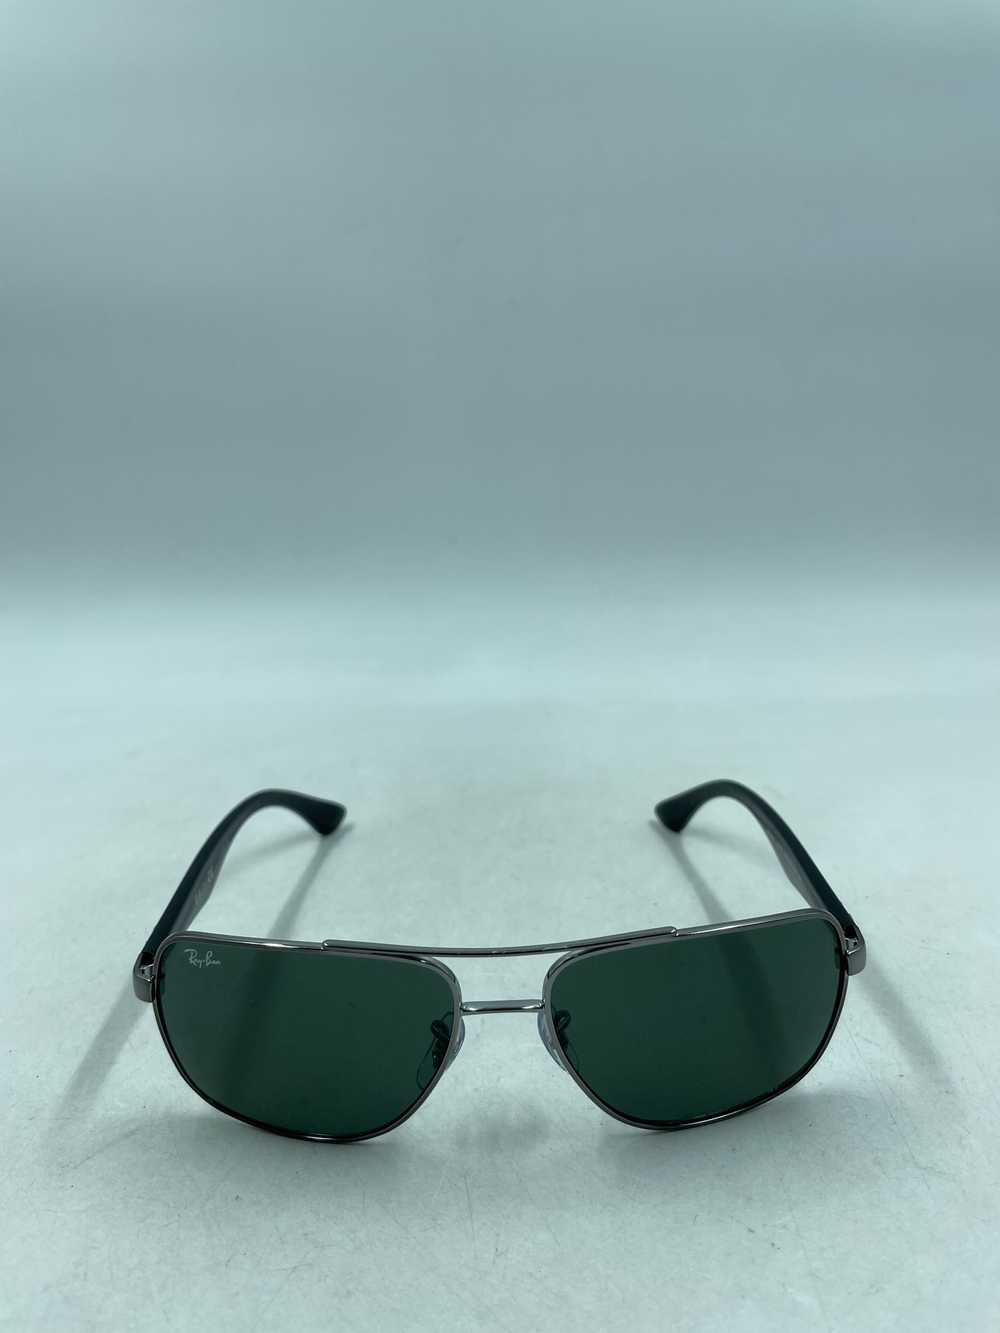 Ray-Ban Silver Pilot Sunglasses - image 2